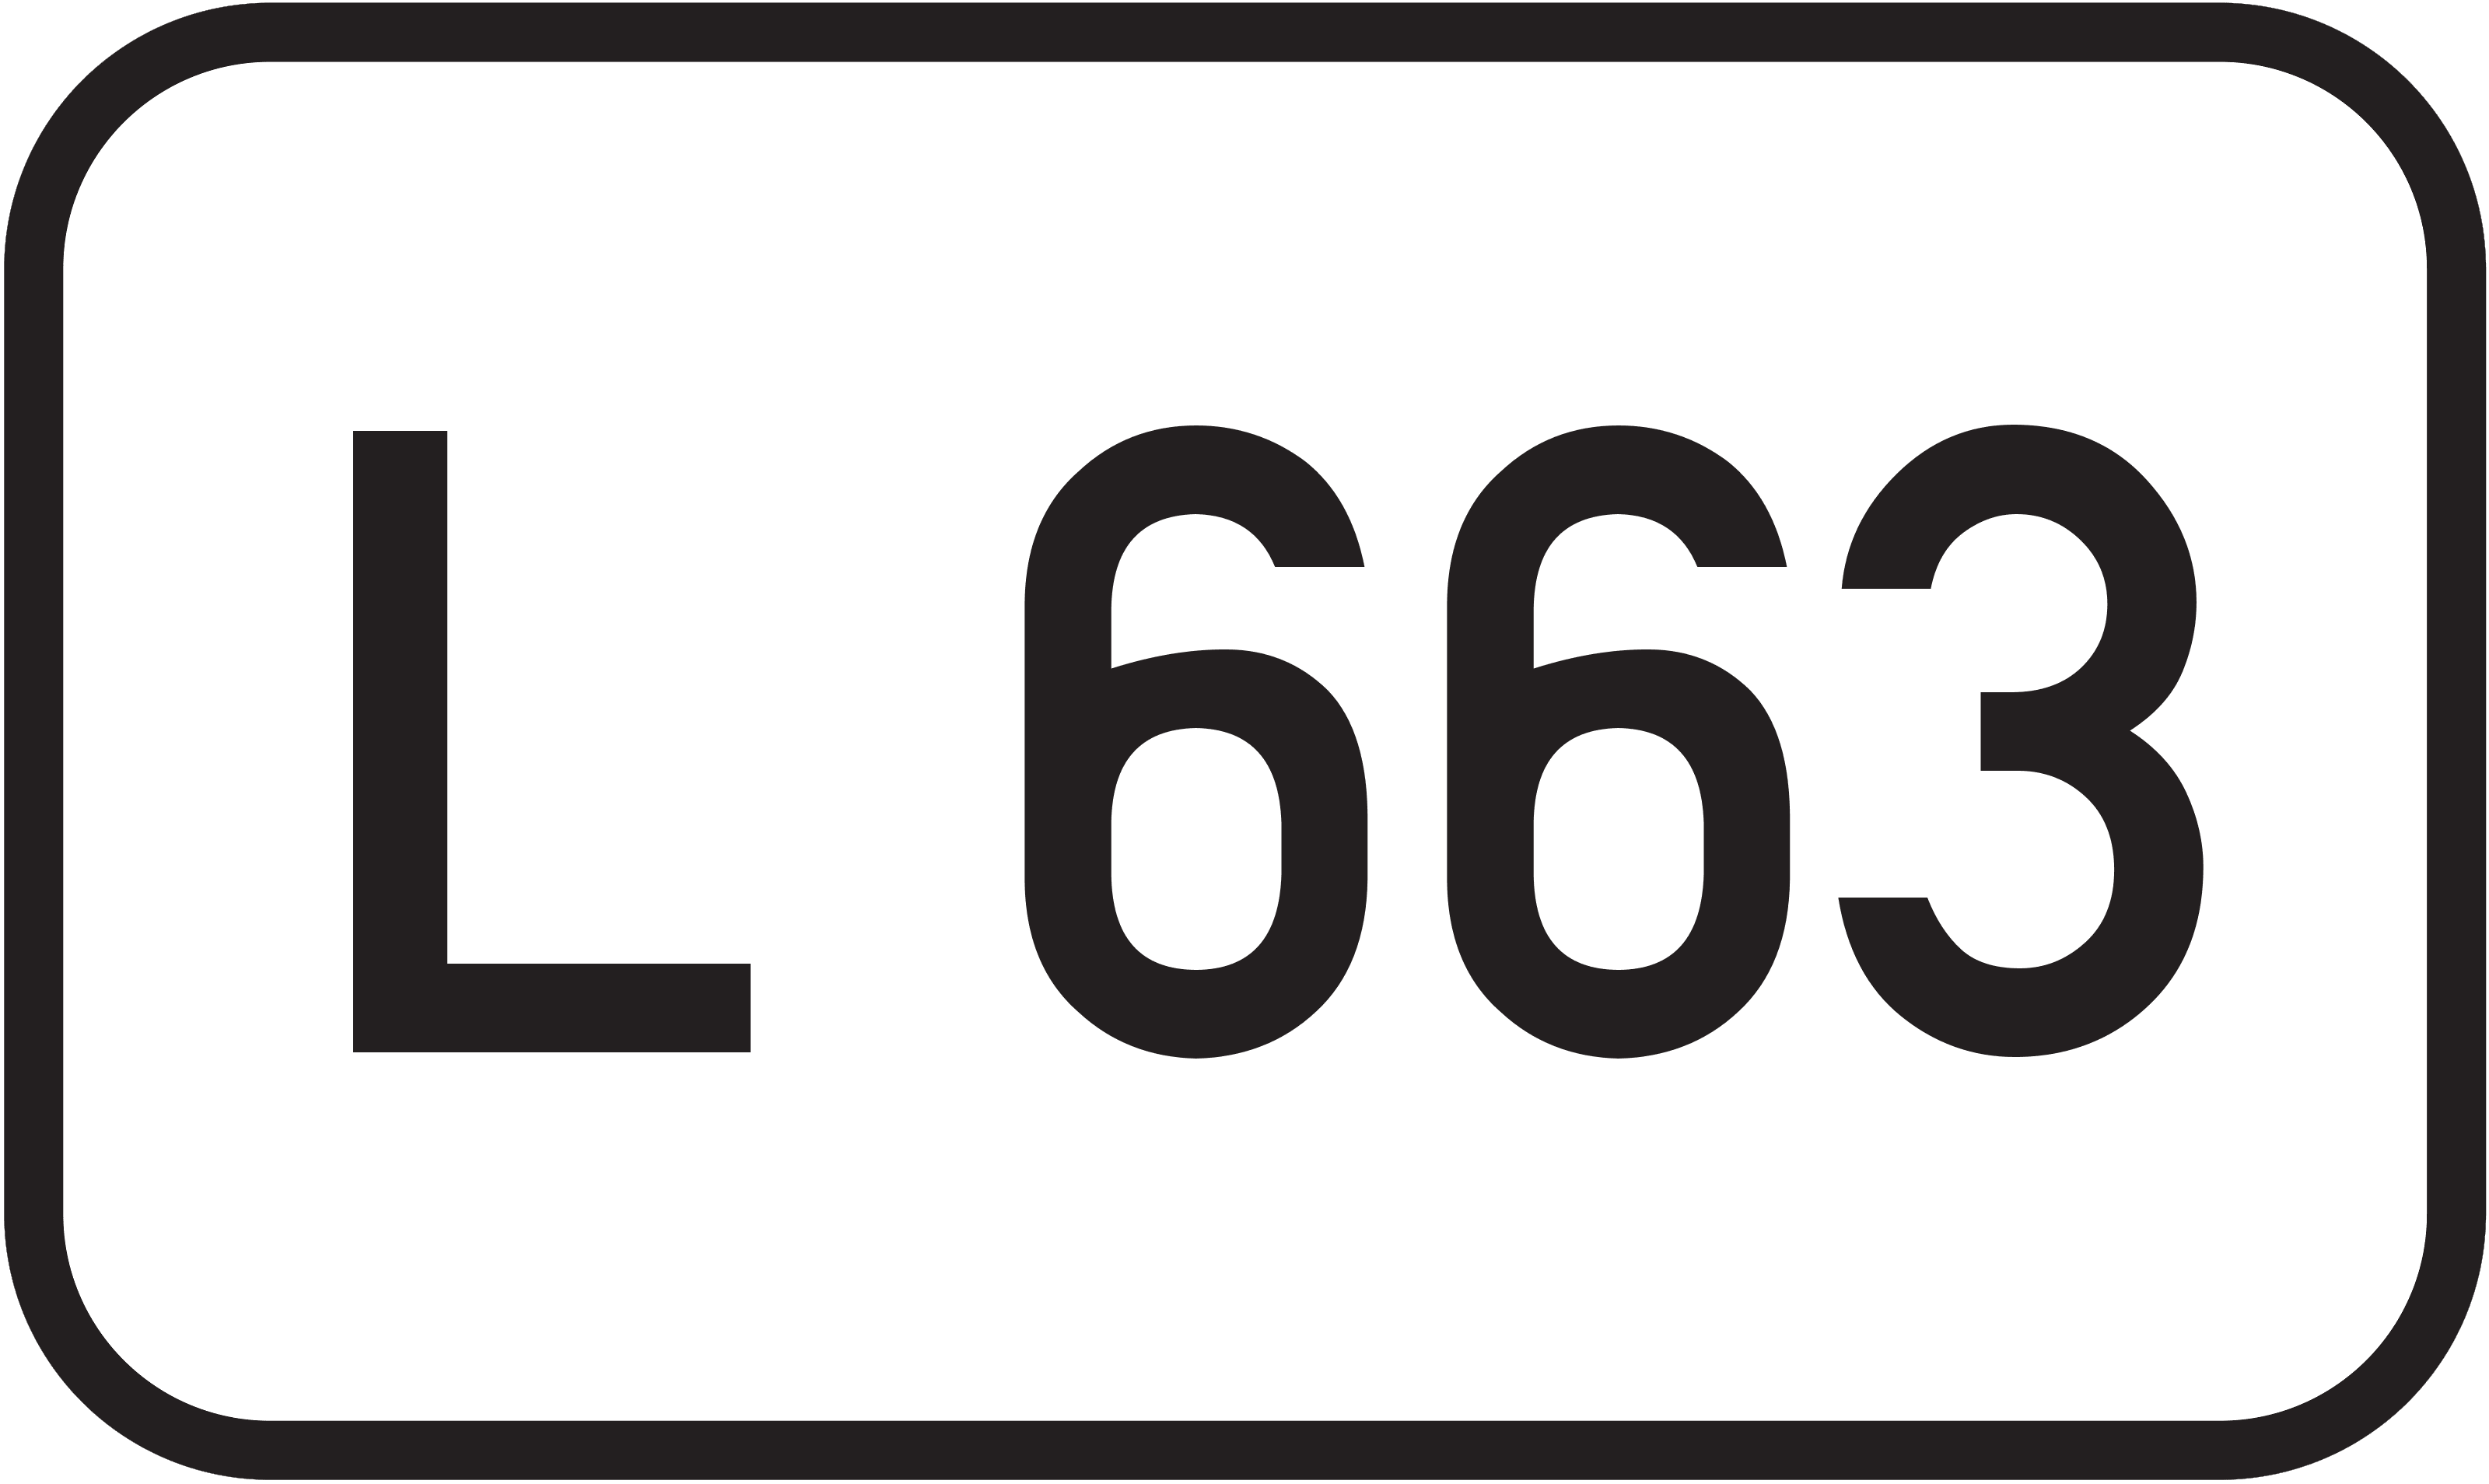 Straßenschild Landesstraße L 663